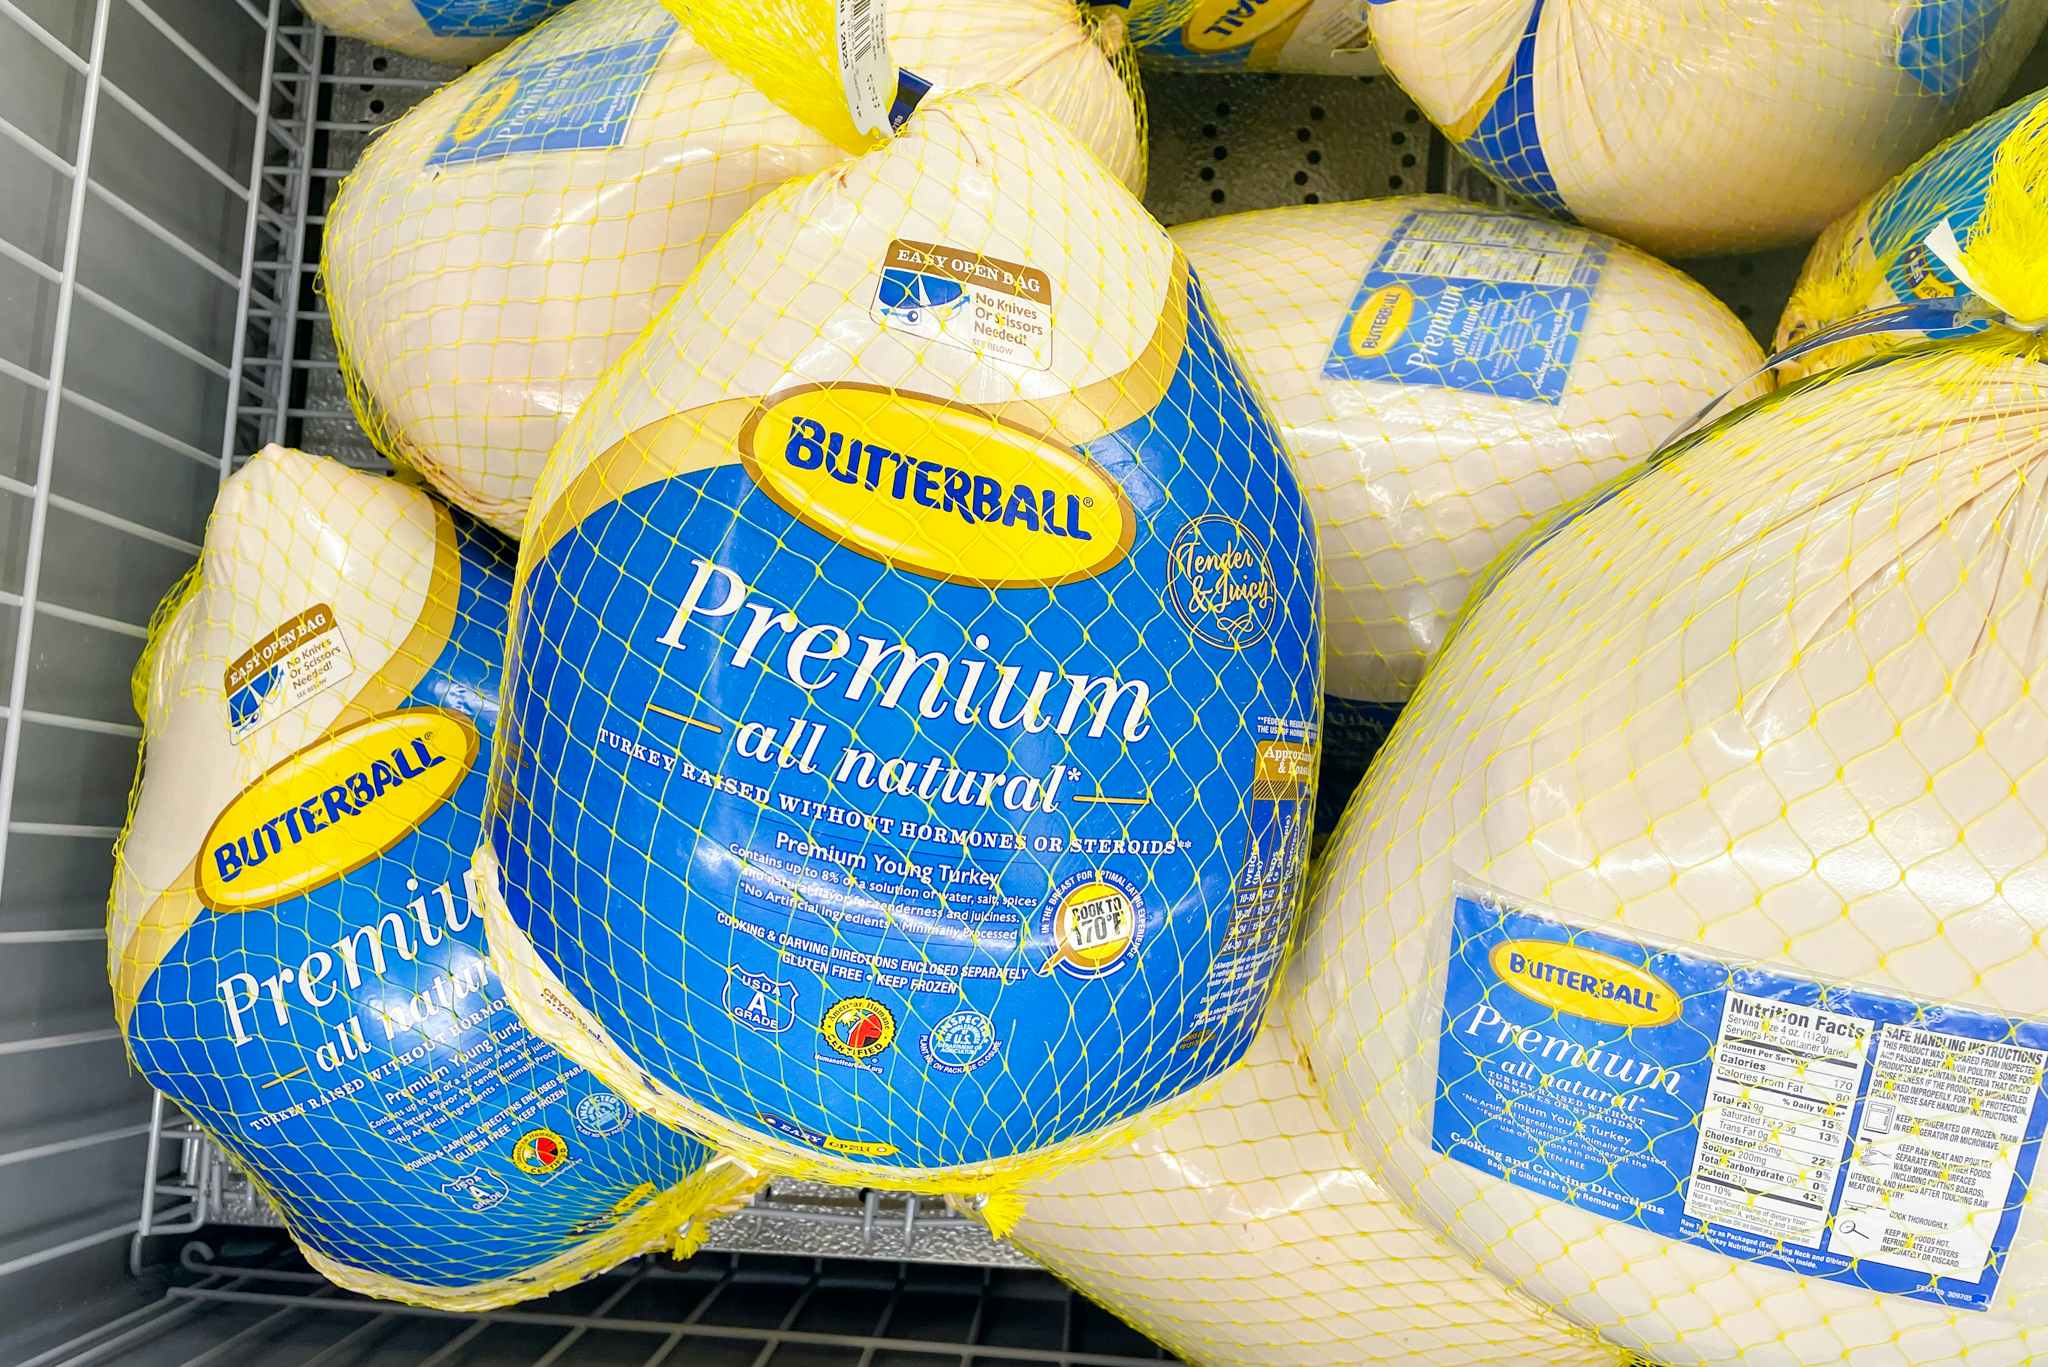 Butterball Ready to Roast Frozen Whole Turkey, 12 lbs - Harris Teeter